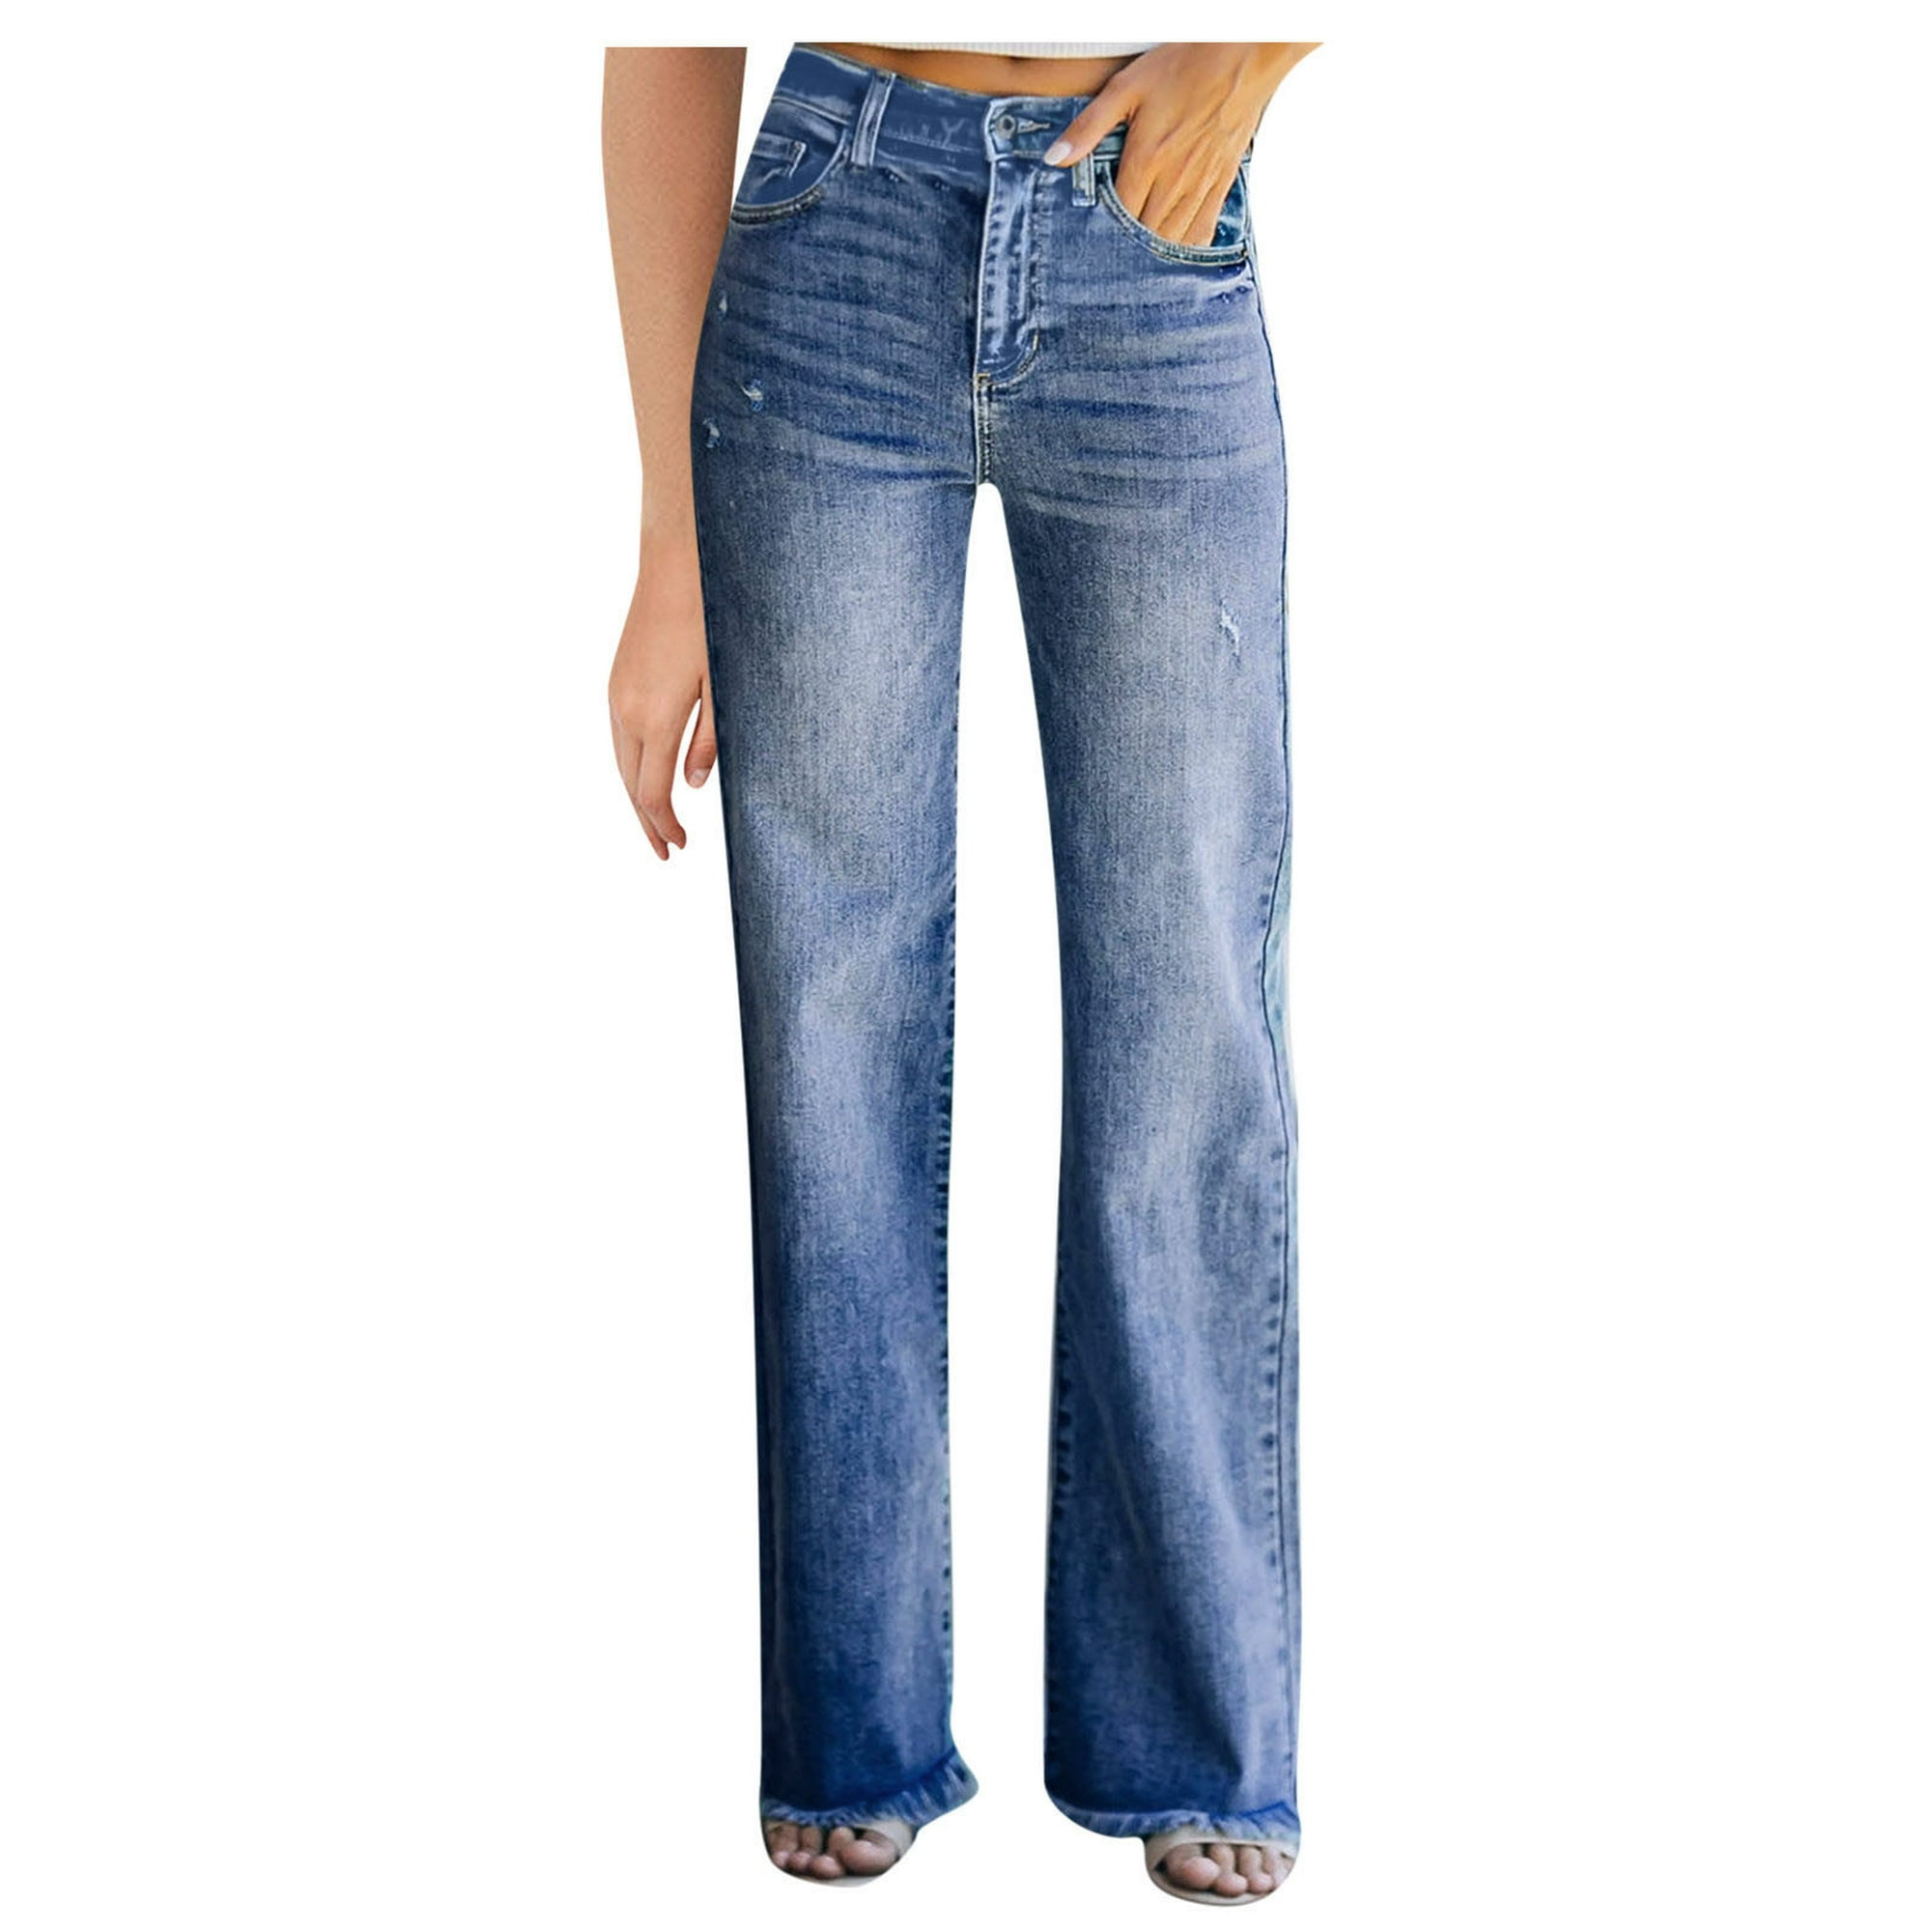 Gibobby Gibobby Pantalones Jean Mujer Juniors Jeans altos